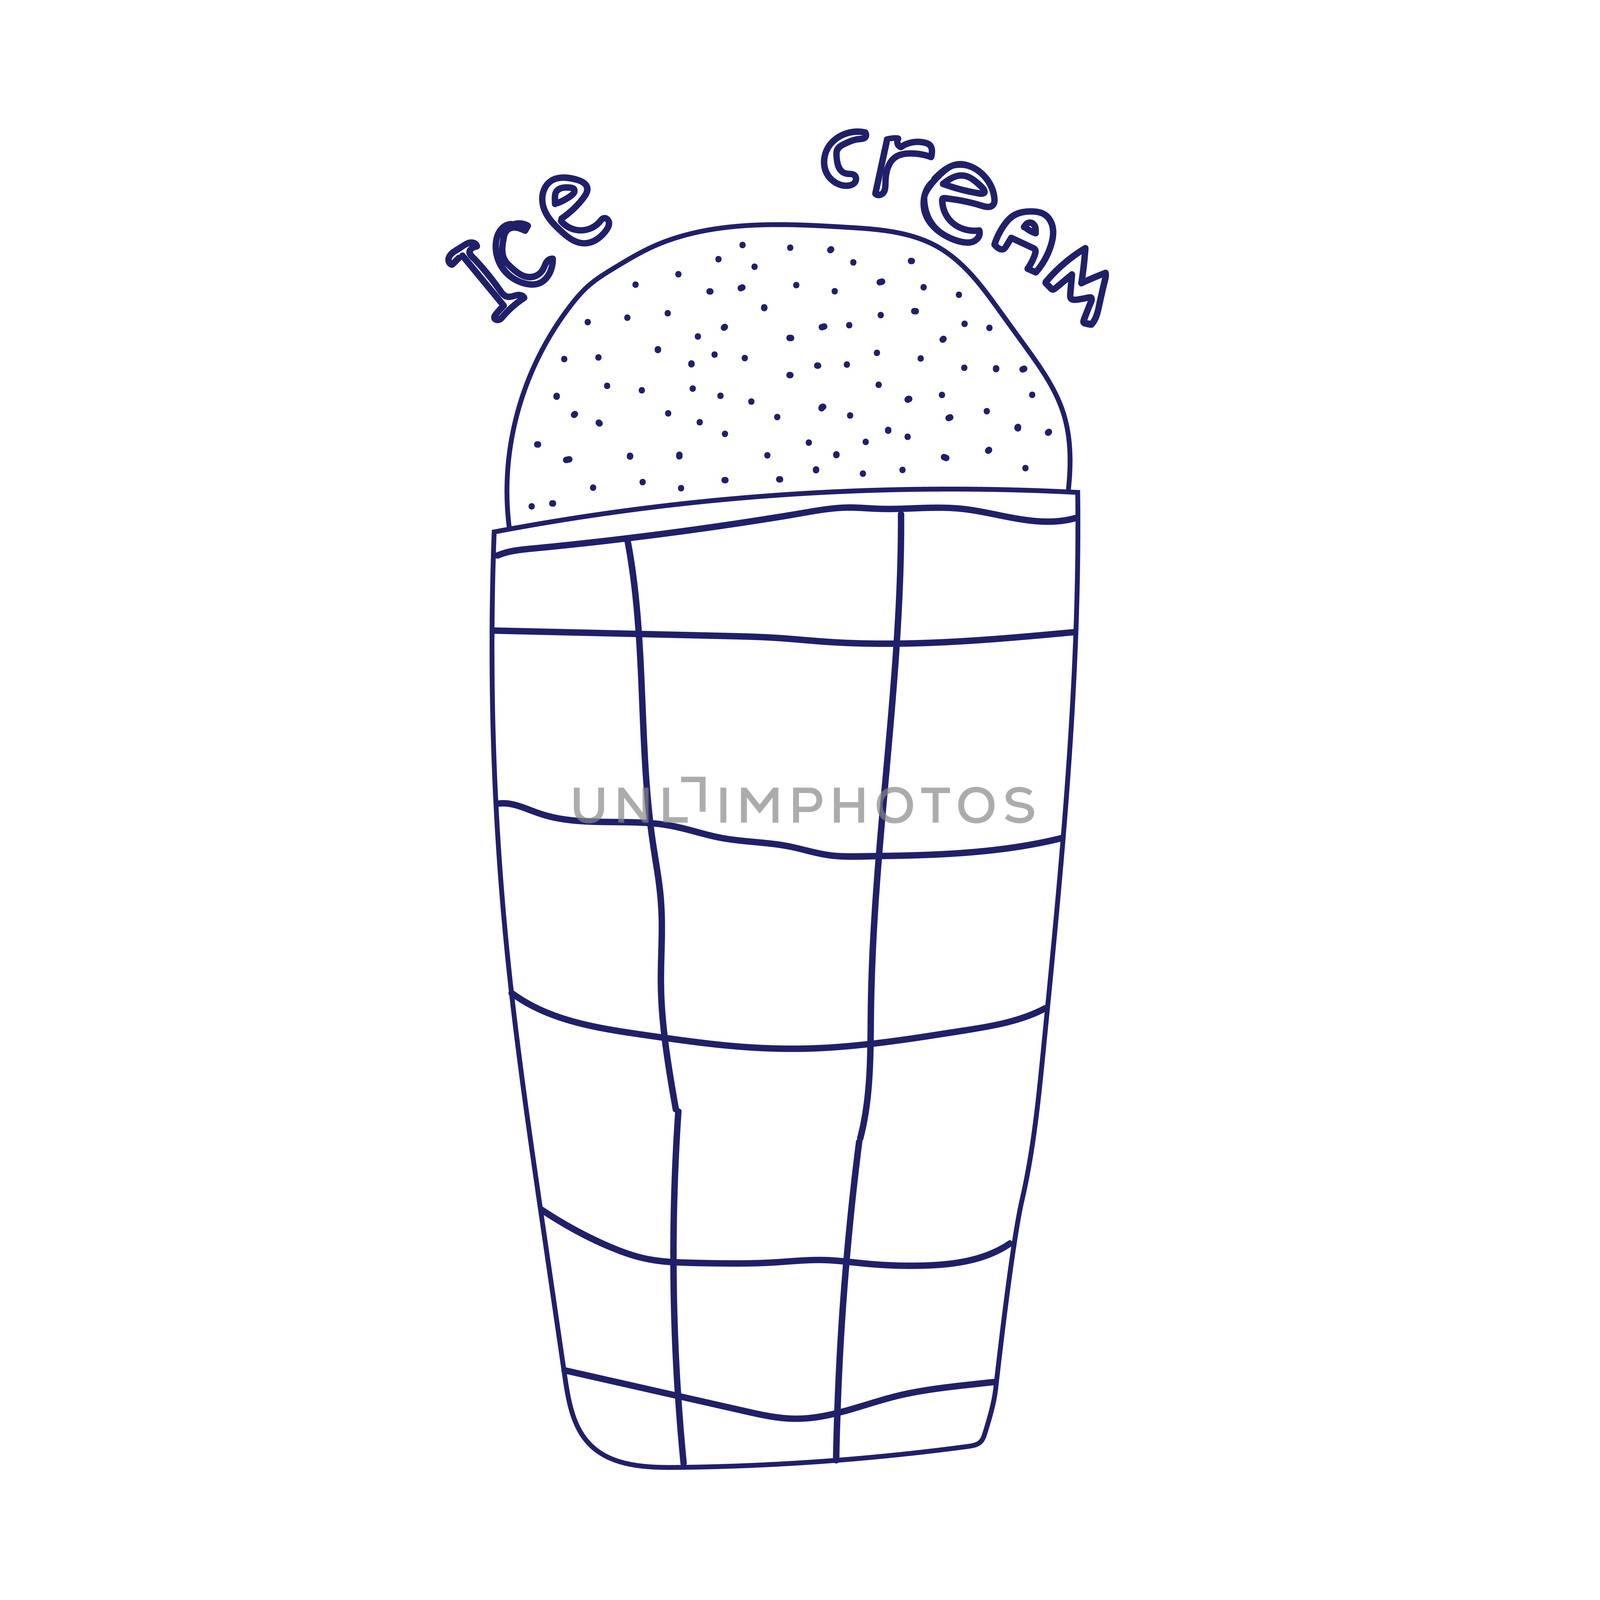 Doodle ice cream cone frozen dessert style sketch in format by zaryov